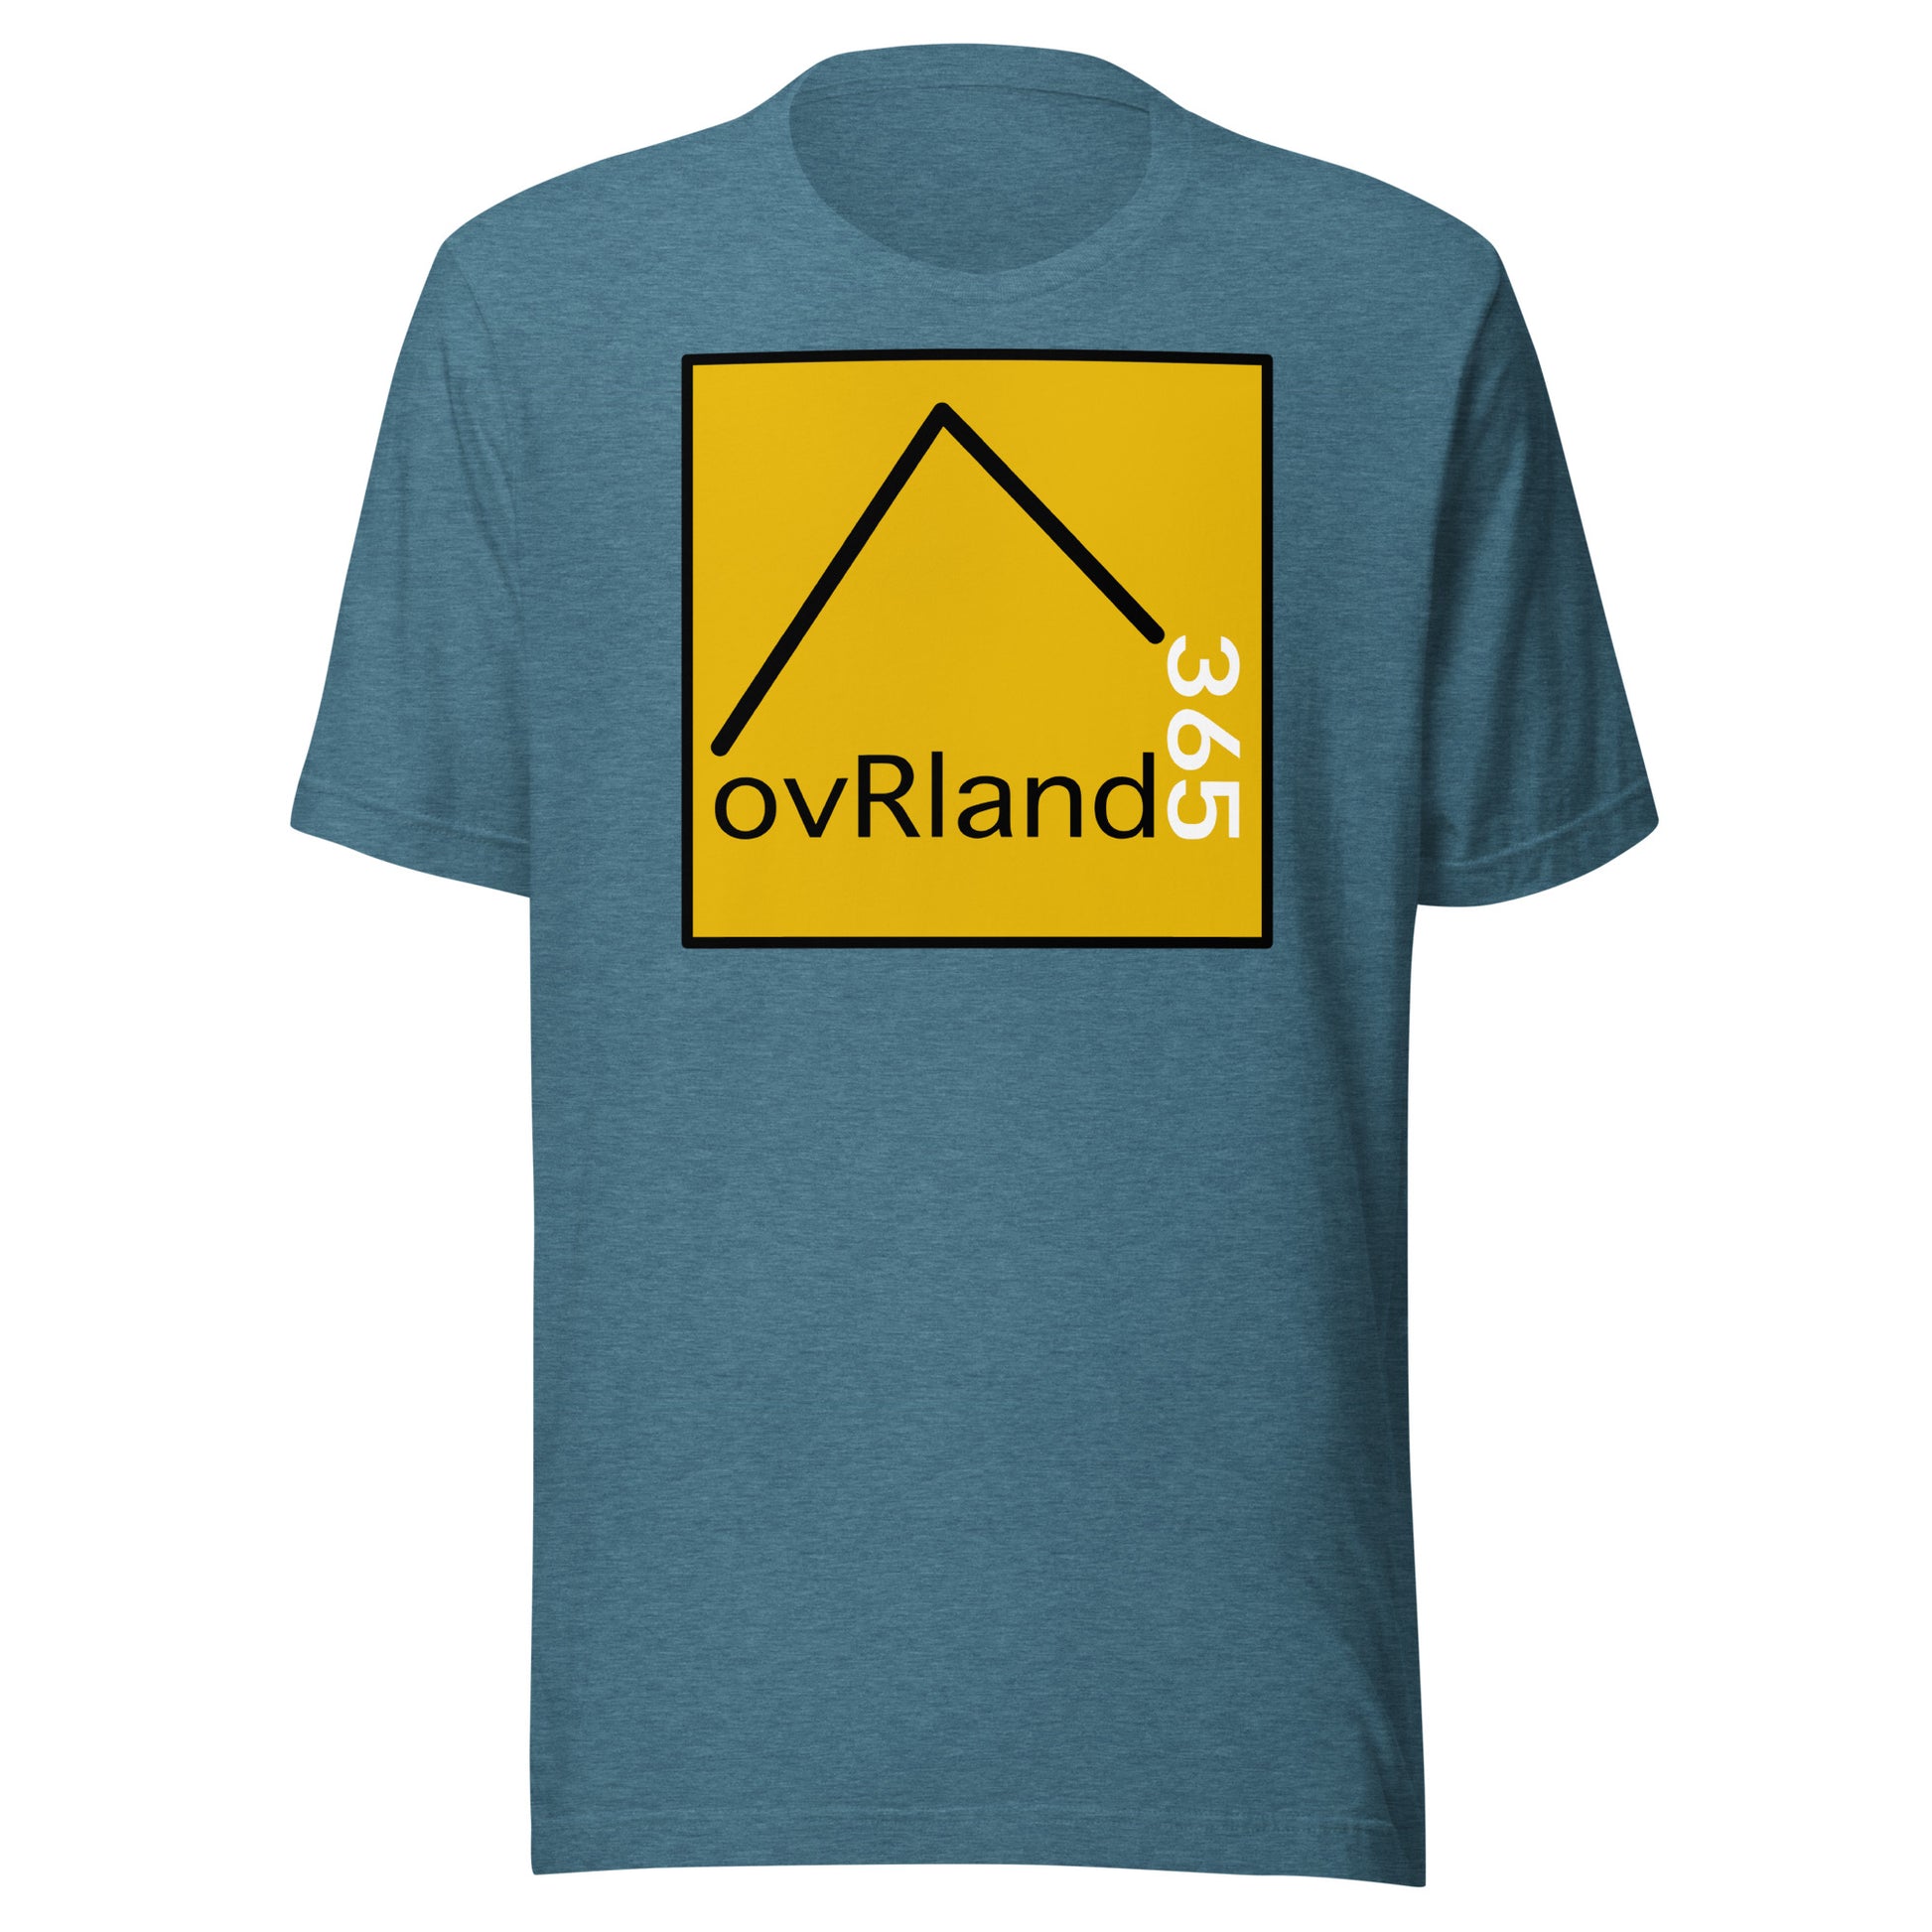 Classic ovRland365 t-shirt, teal. overland365.com